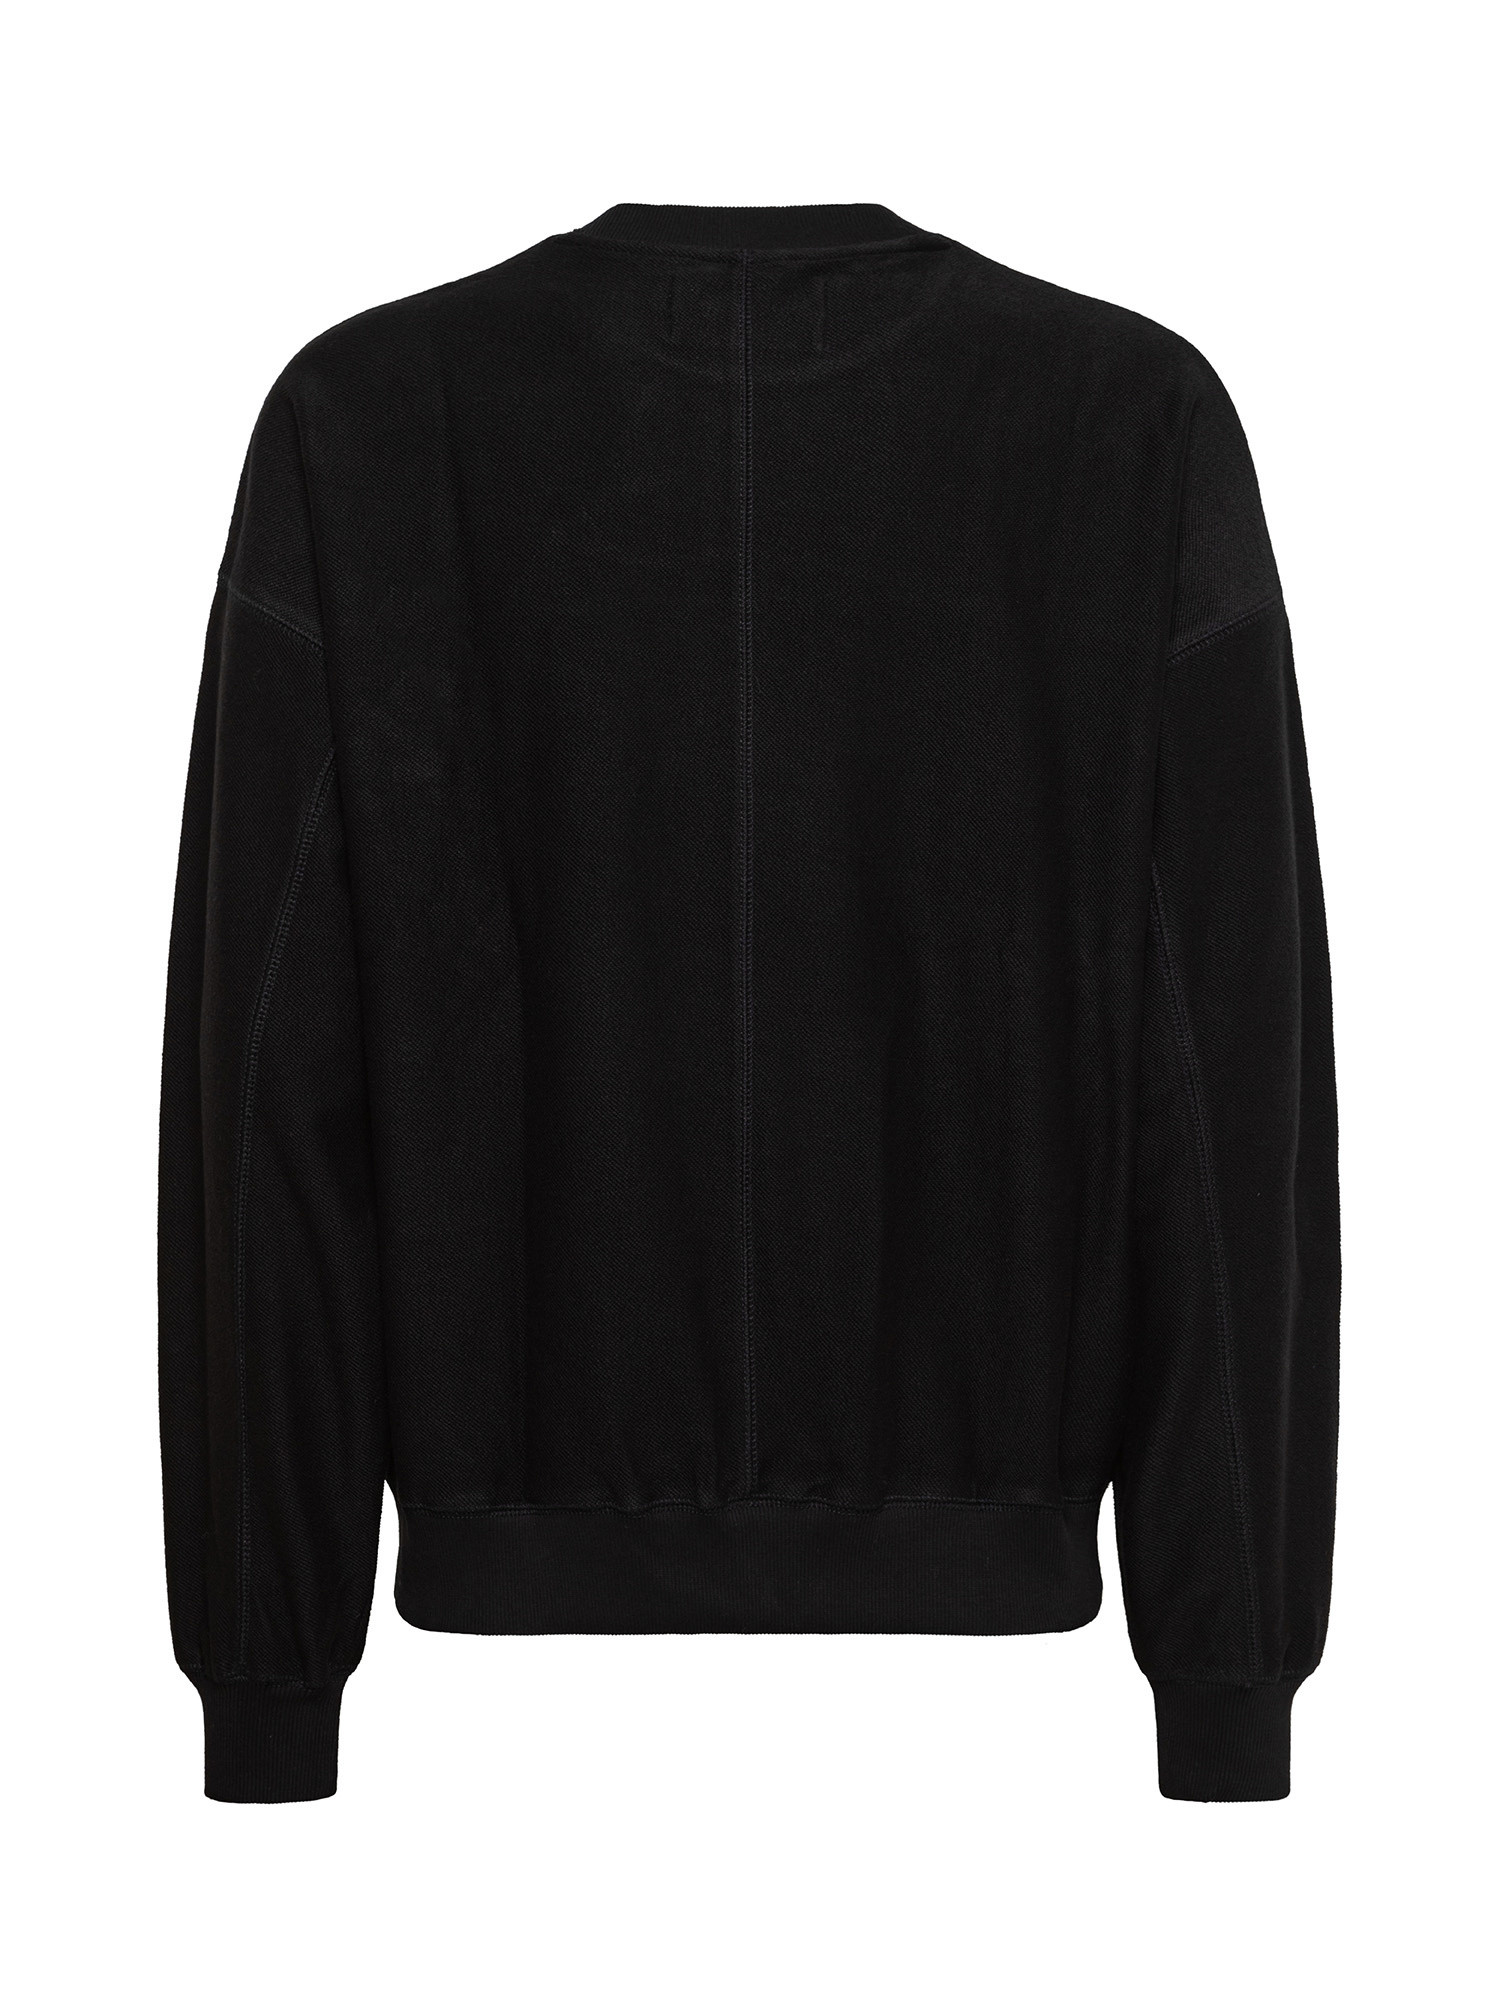 Cotton crewneck sweatshirt with logo, Black, large image number 1